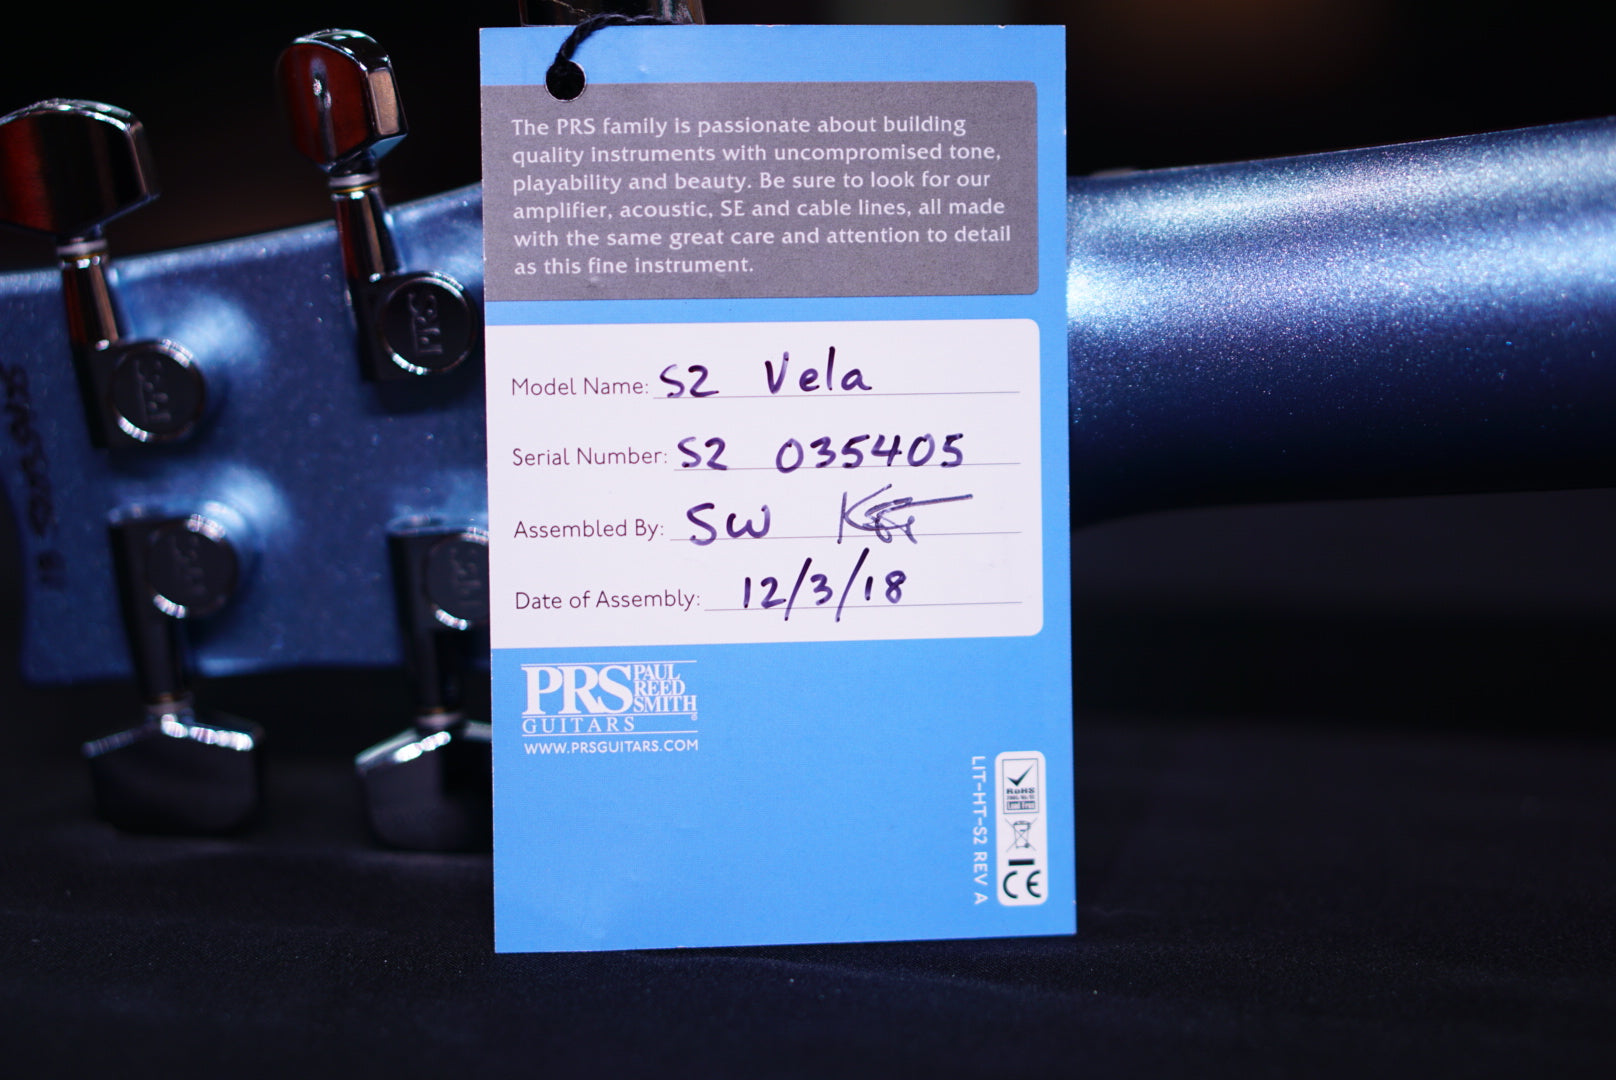 PRS S2 Vela Frost Blue Metallic s2 035405 - HIENDGUITAR   PRS GUITAR